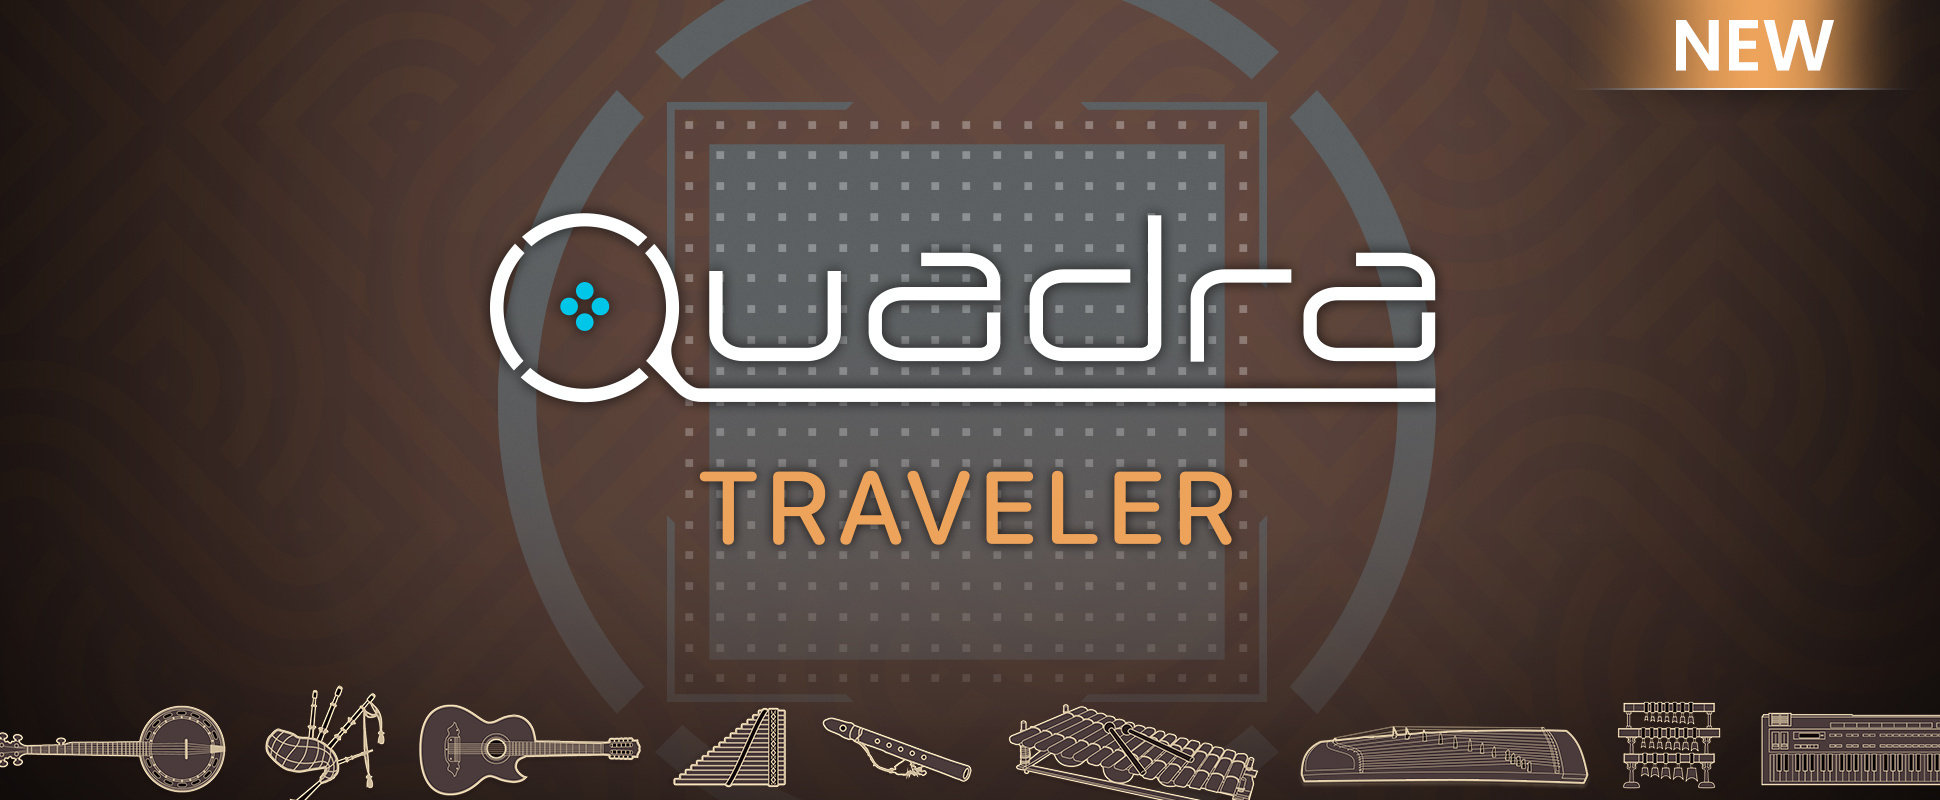 Quadra Traveler - New